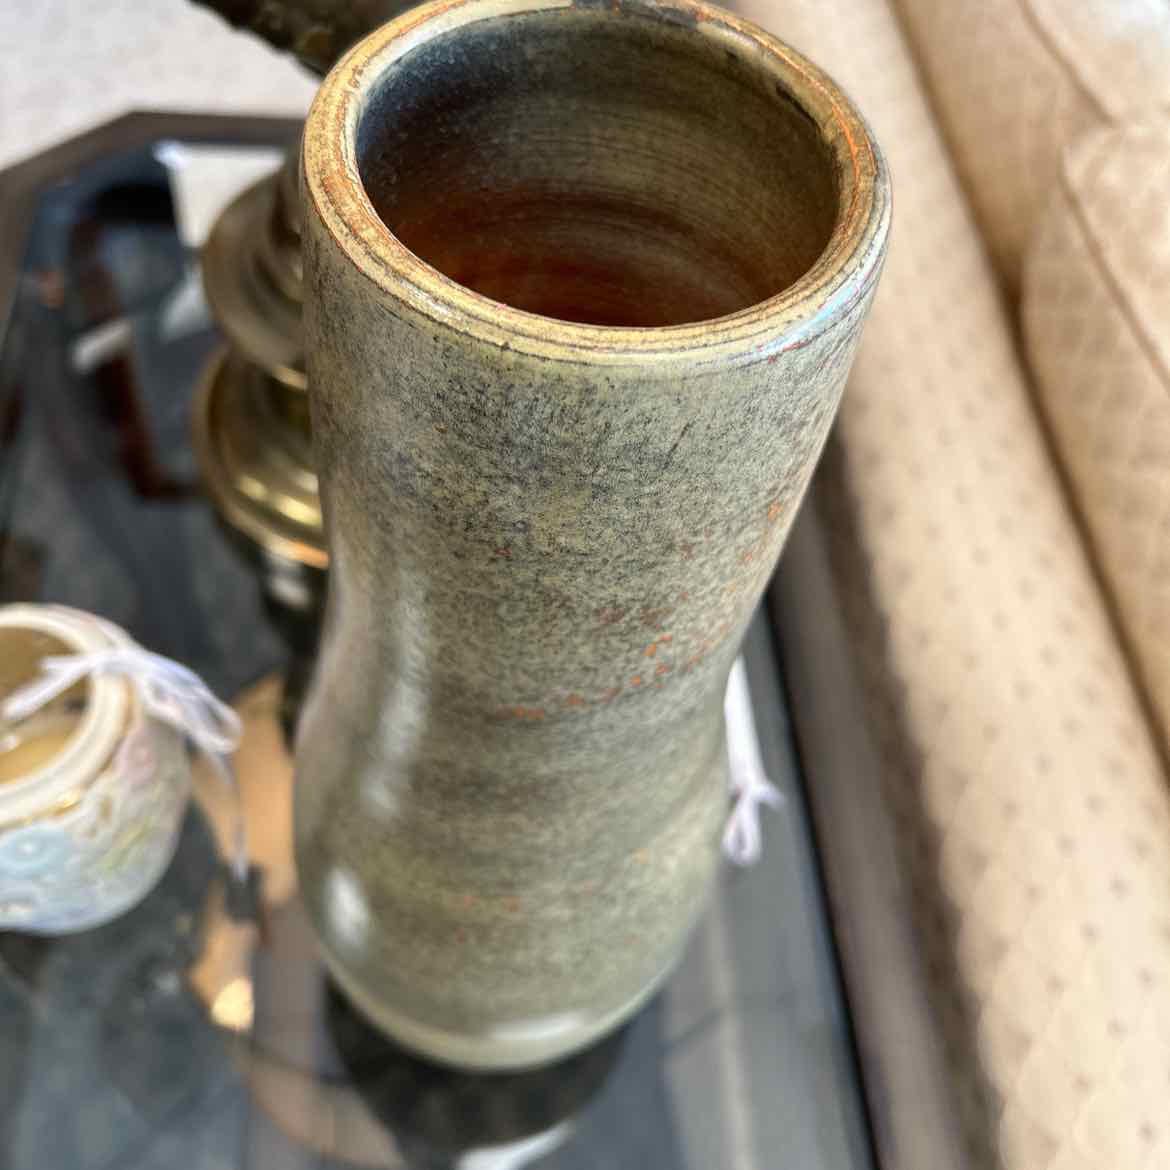 Tan Speckled Pottery Vase